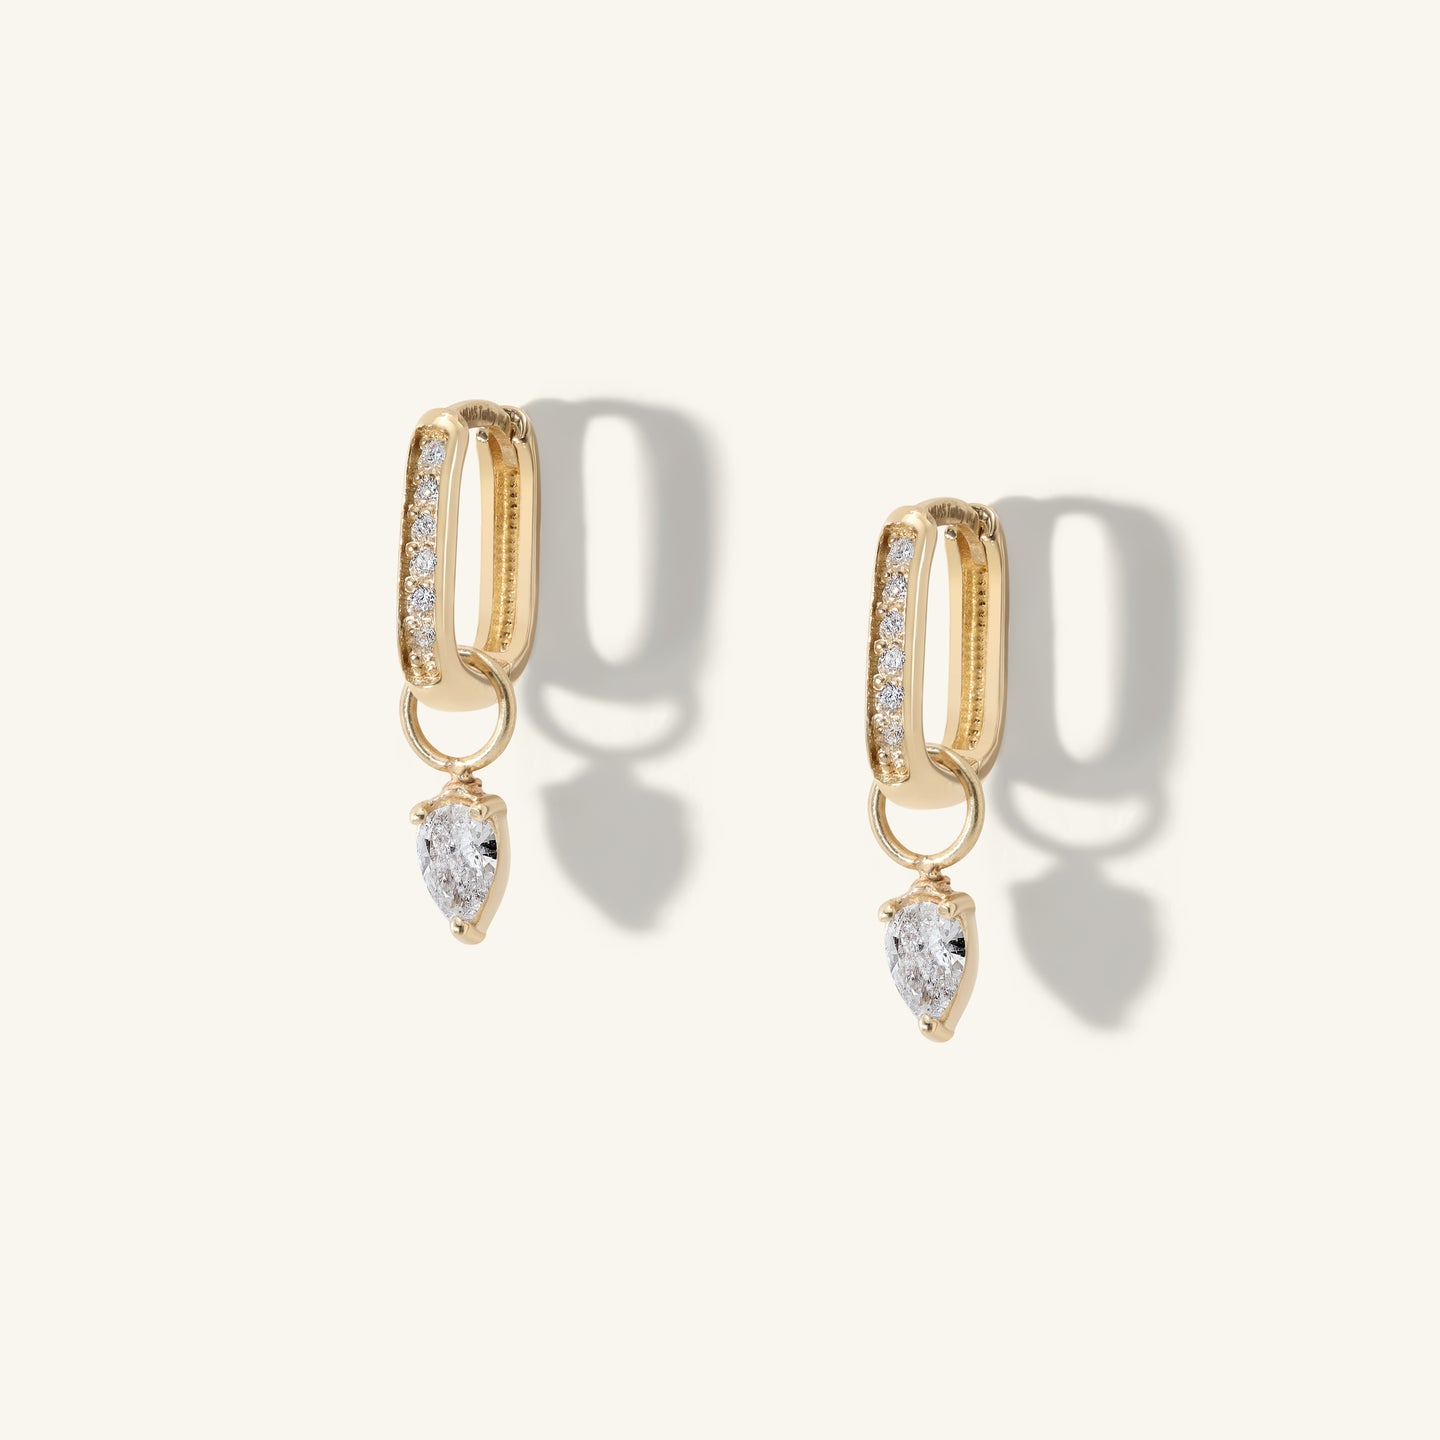 Pear Shaped Diamond Earring Charms